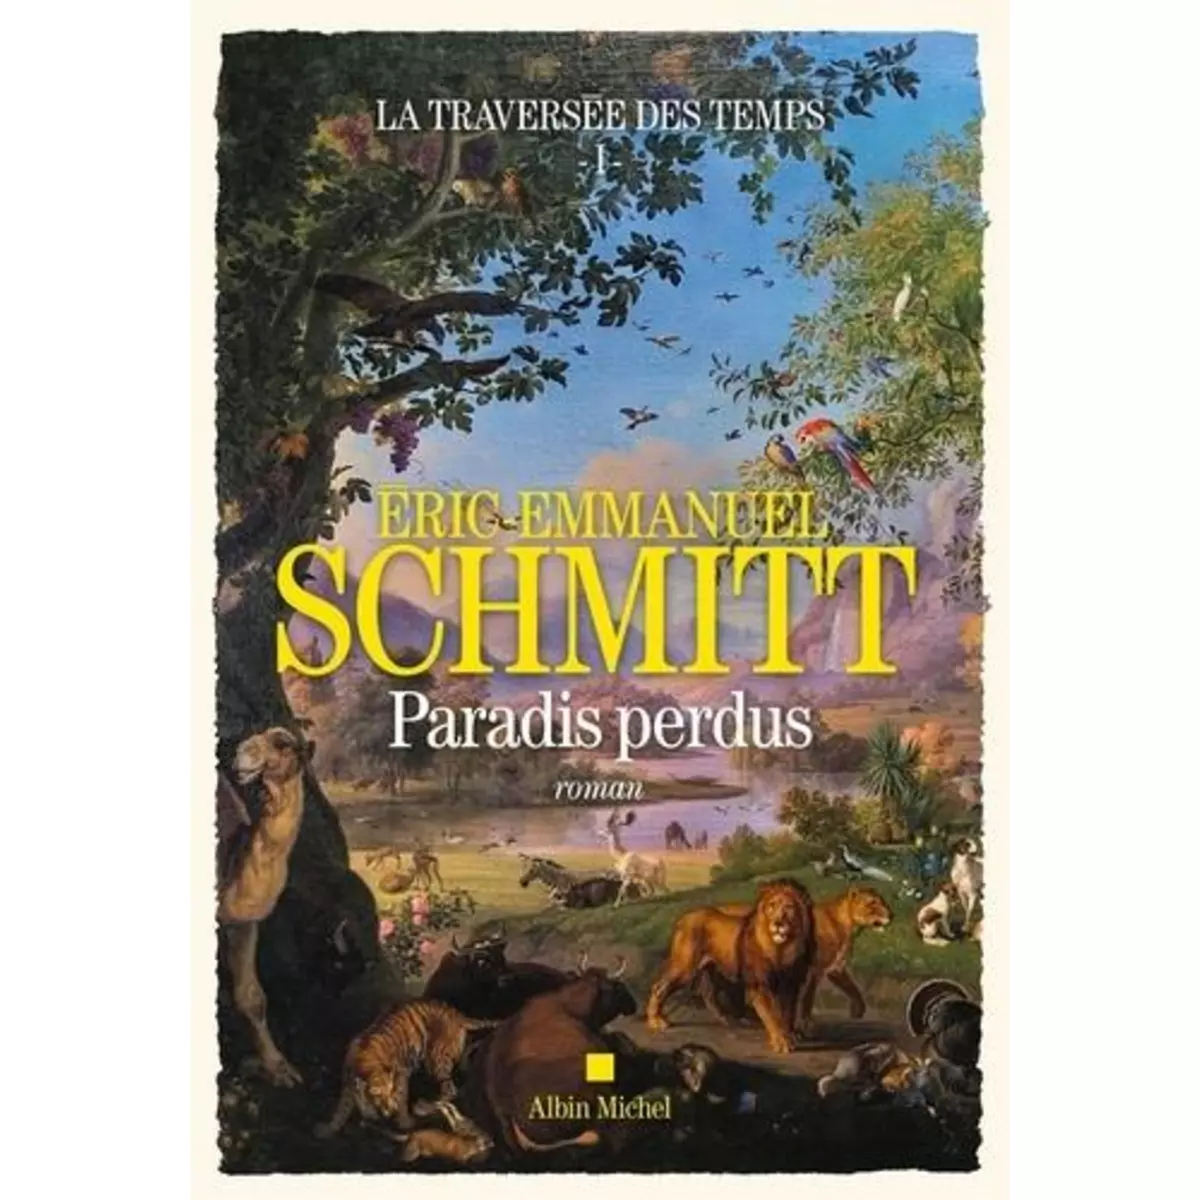  LA TRAVERSEE DES TEMPS TOME 1 : PARADIS PERDUS, Schmitt Eric-Emmanuel